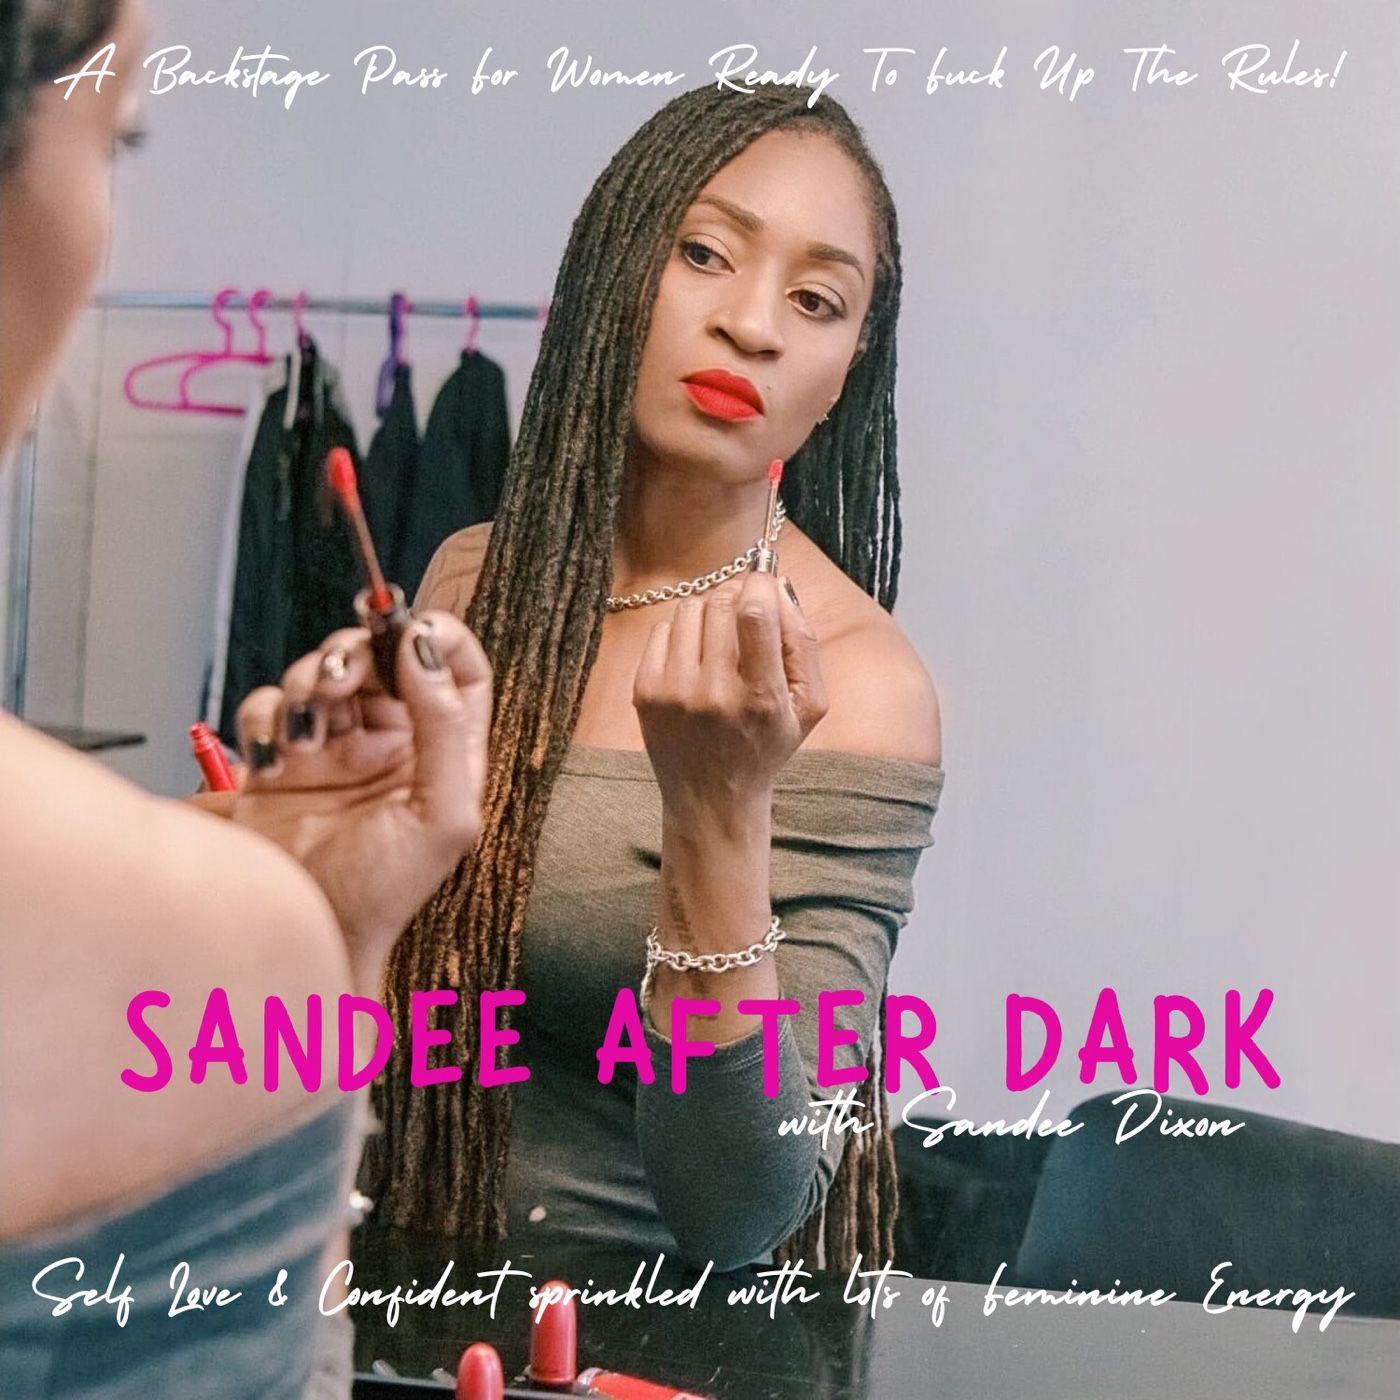 Sandee After Dark Podcast